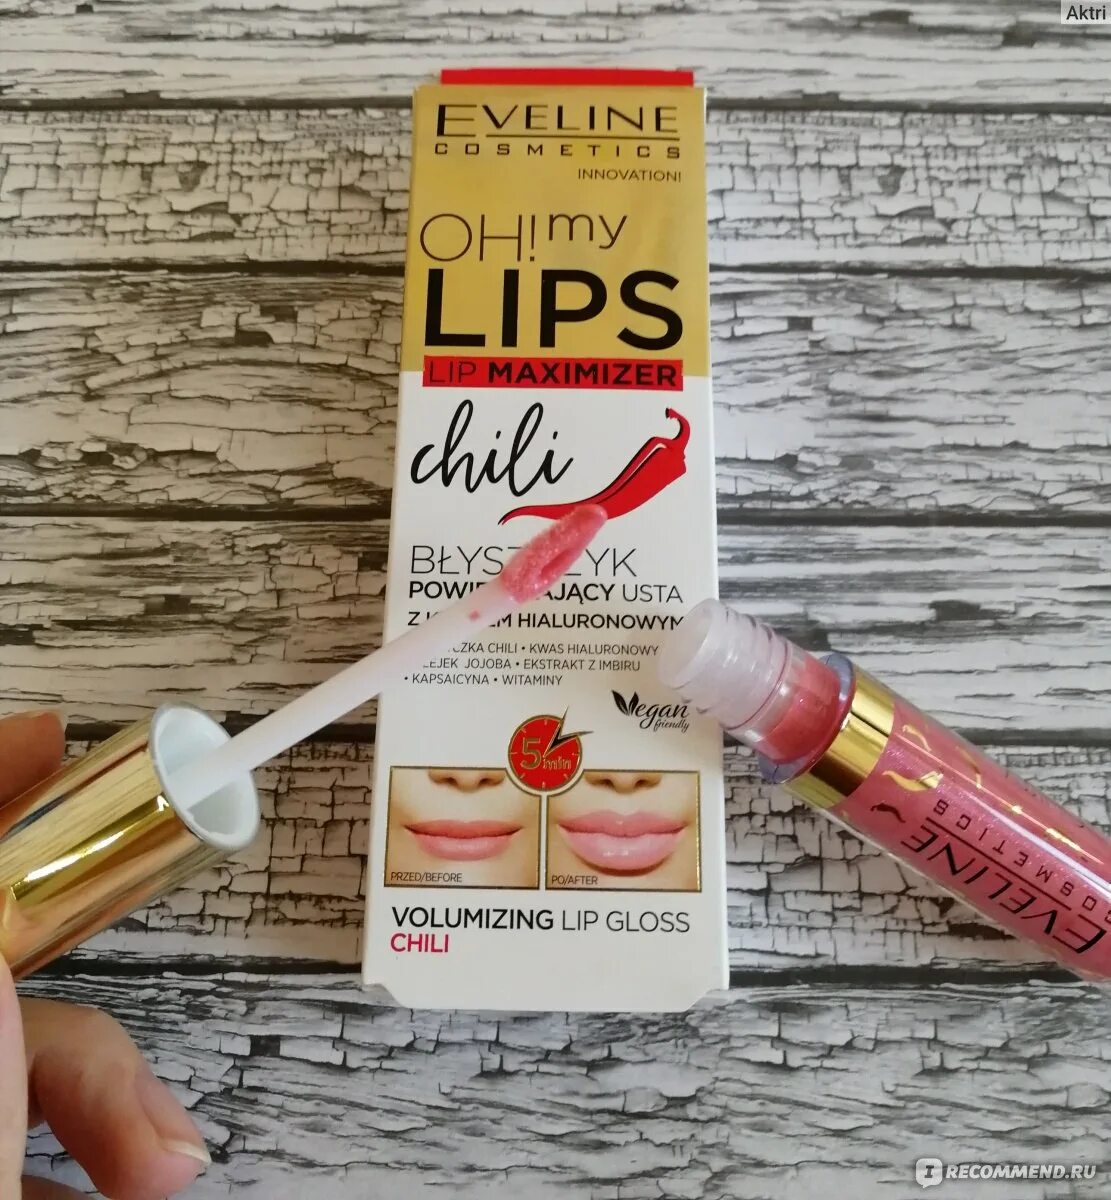 Lip Maximizer Eveline Cosmetics. Eveline variete блеск для губ. Блеск с Чили Eveline. Боеск для губ евелине.